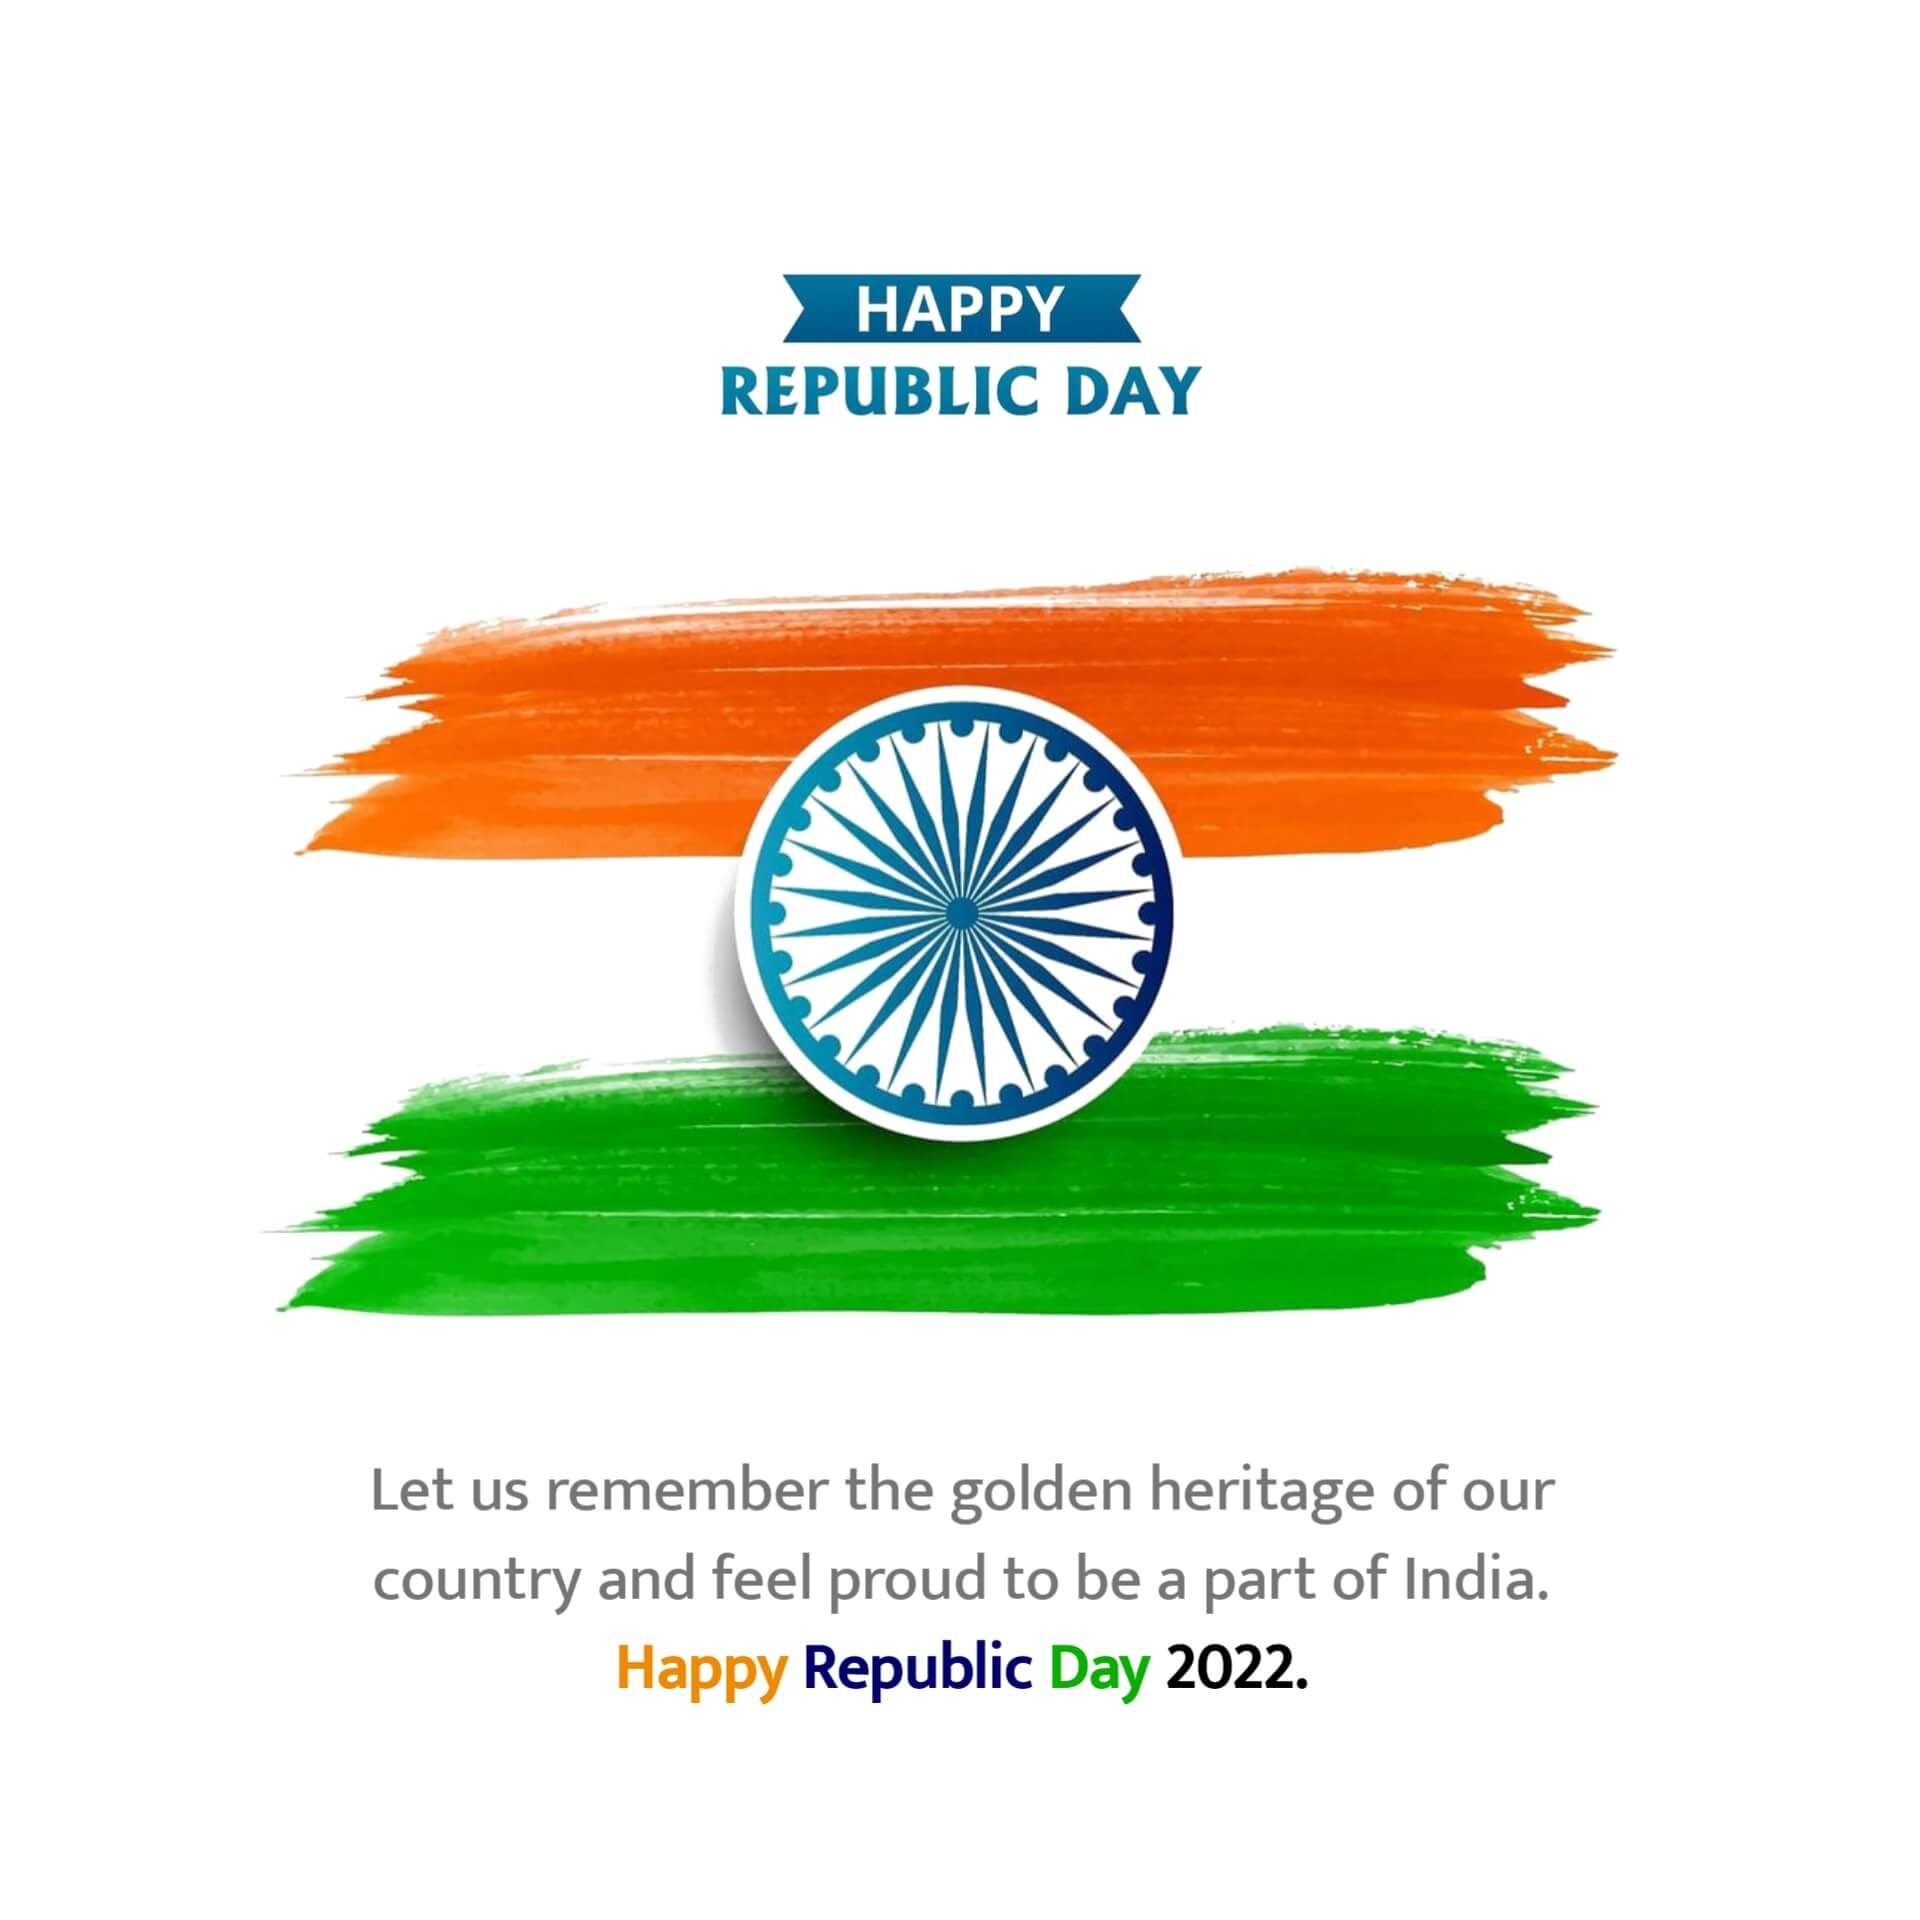 Happy Republic Day Image. Republic day, Republic, We remember